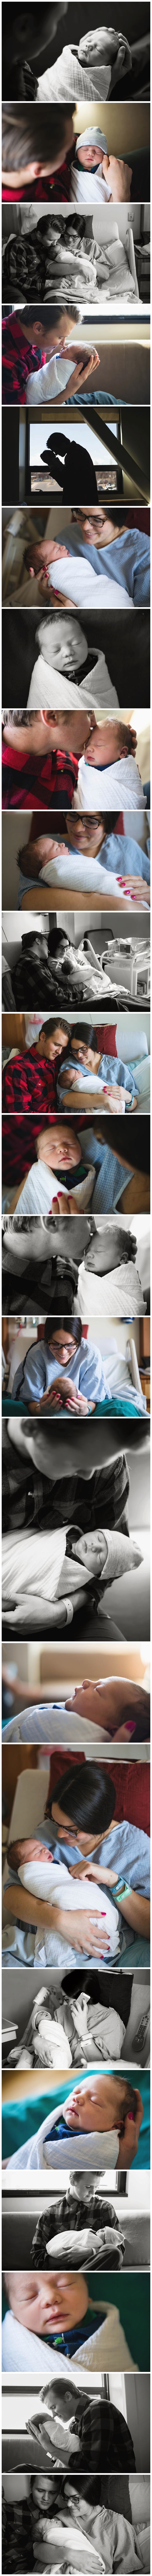 Newborn Hospital Photography Inspiration